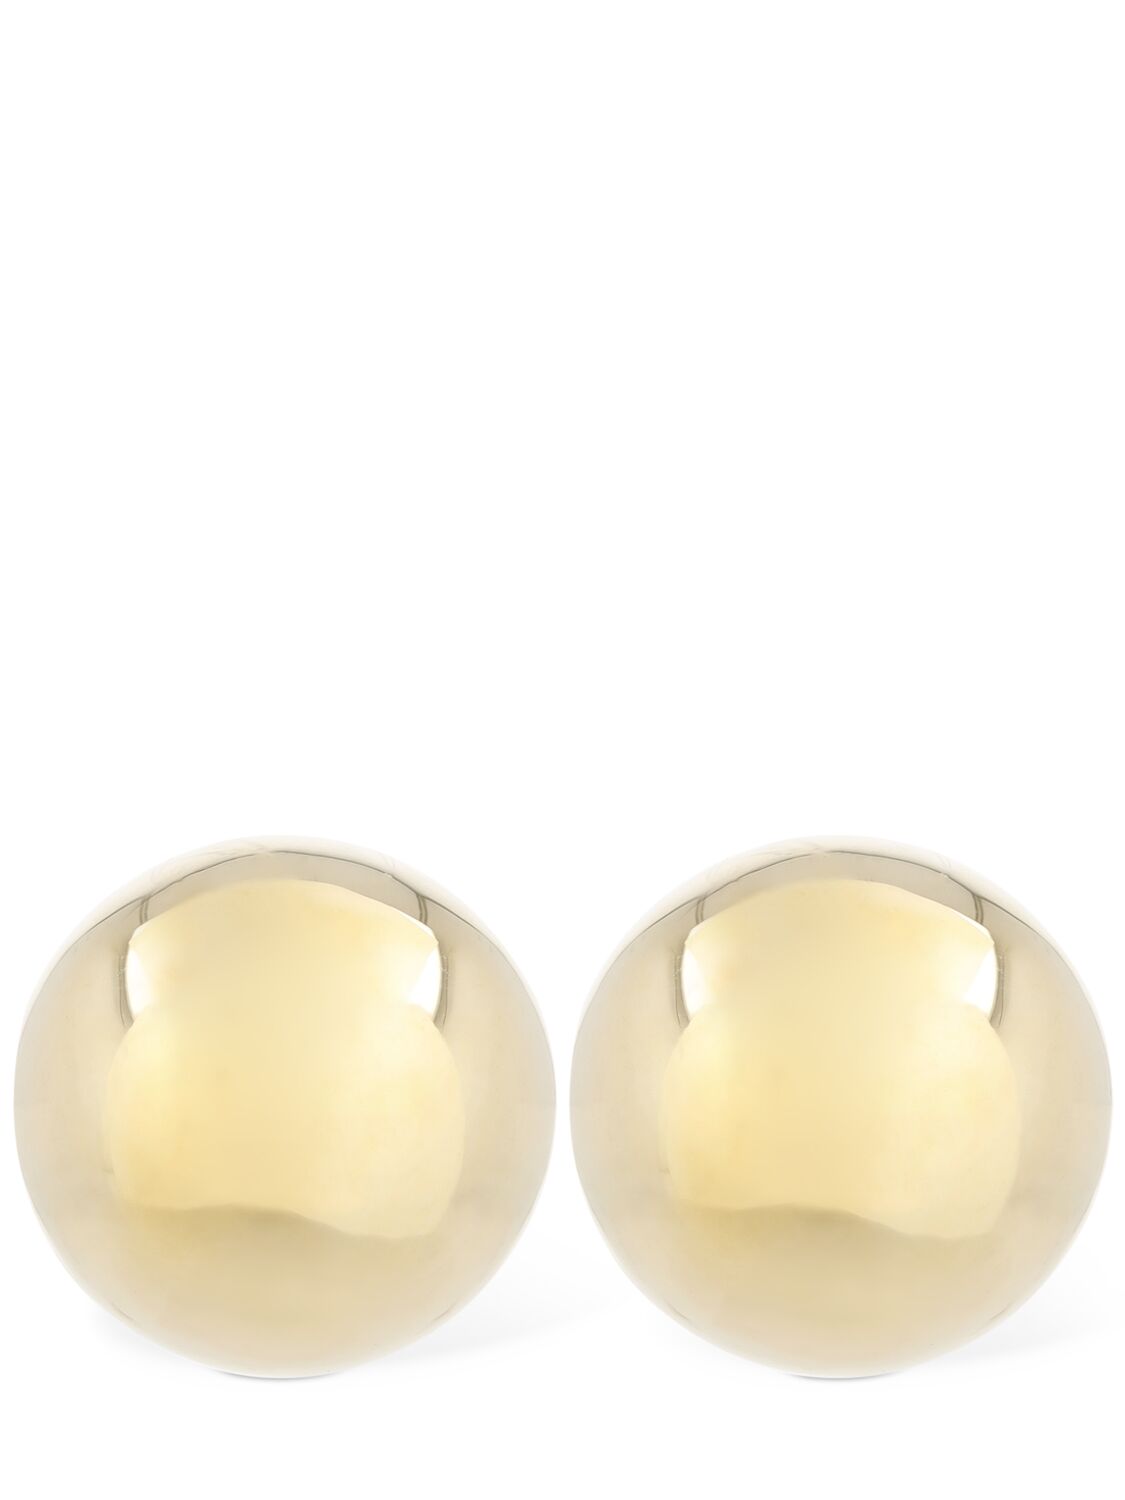 Image of Boule Stud Earrings